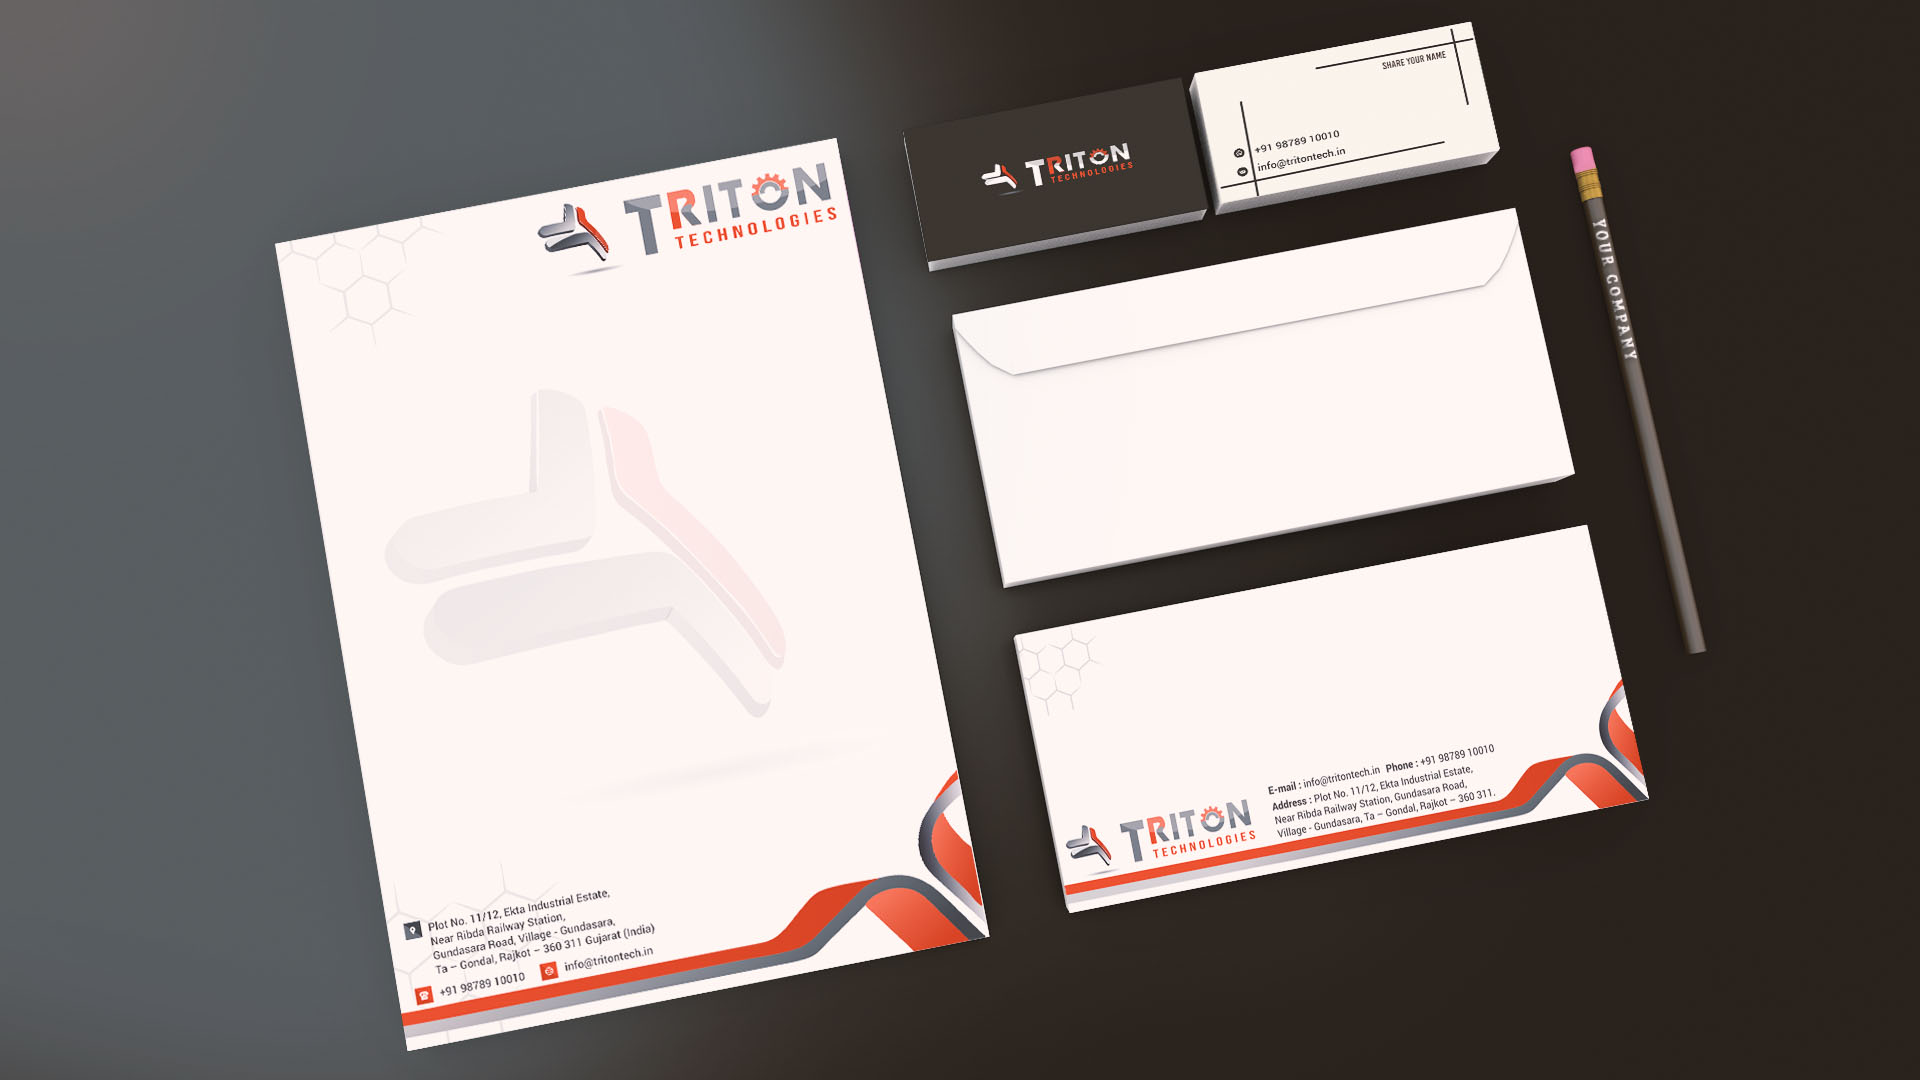 Triton Technologies Pixibit Design Studio